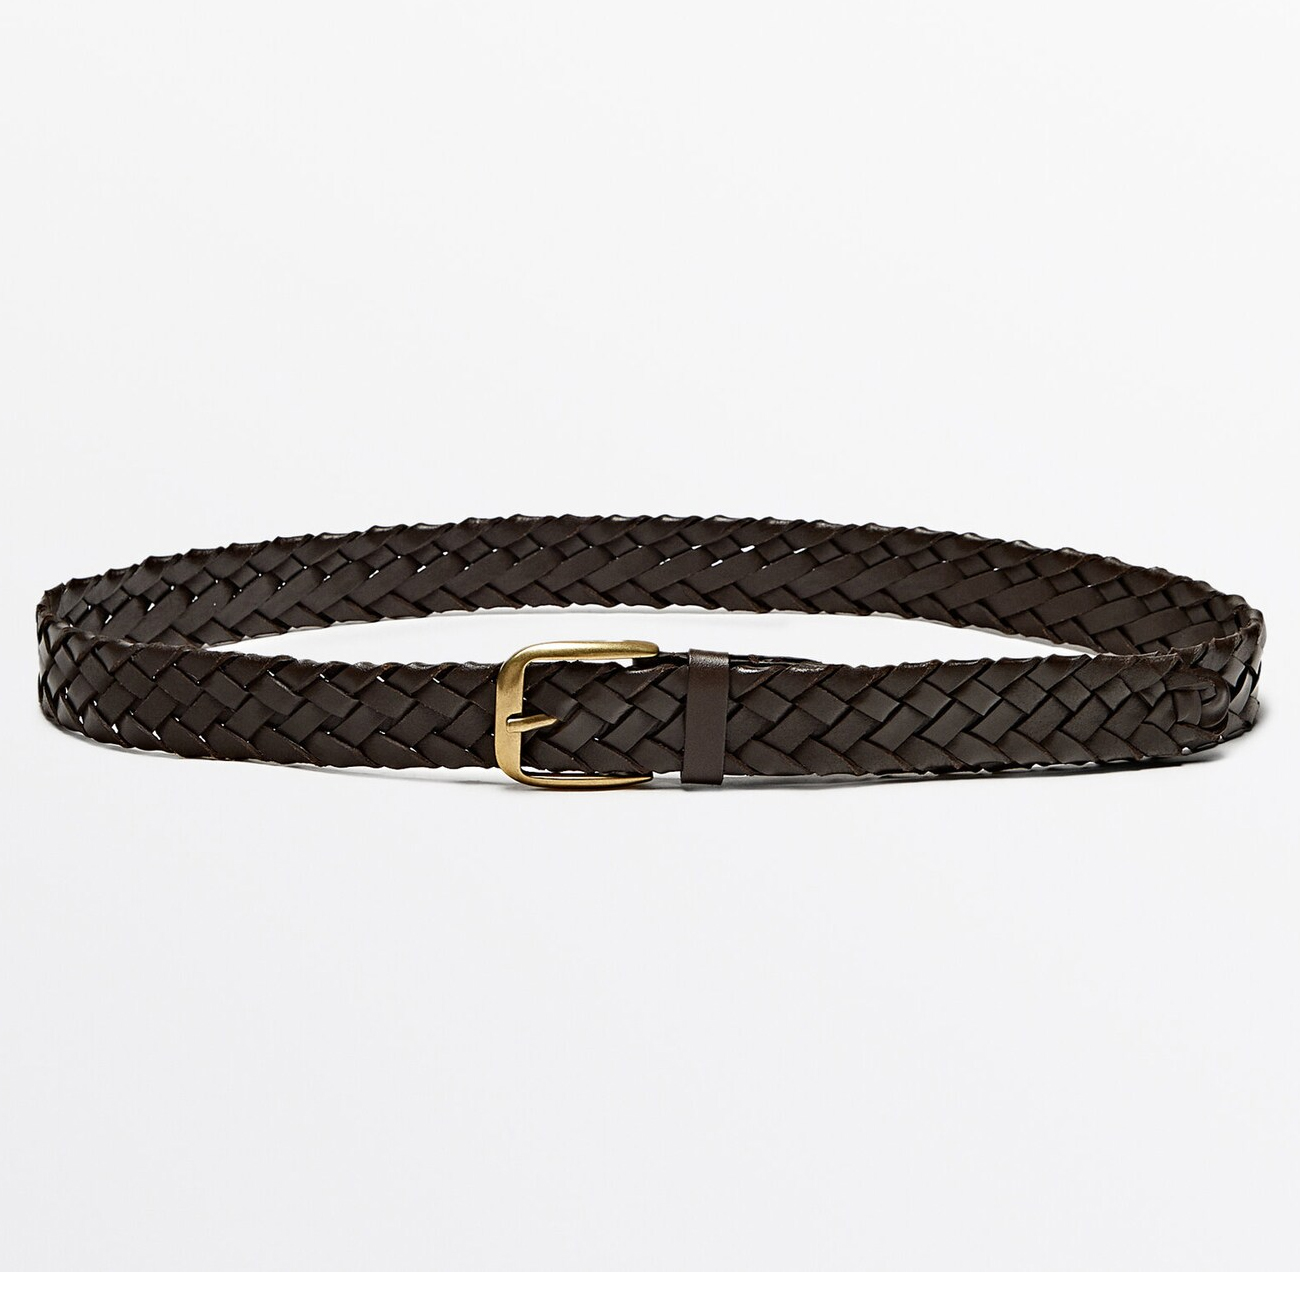 Ремень Massimo Dutti Braided Leather, коричневый ремень massimo dutti leather belt thin limited edition чёрный